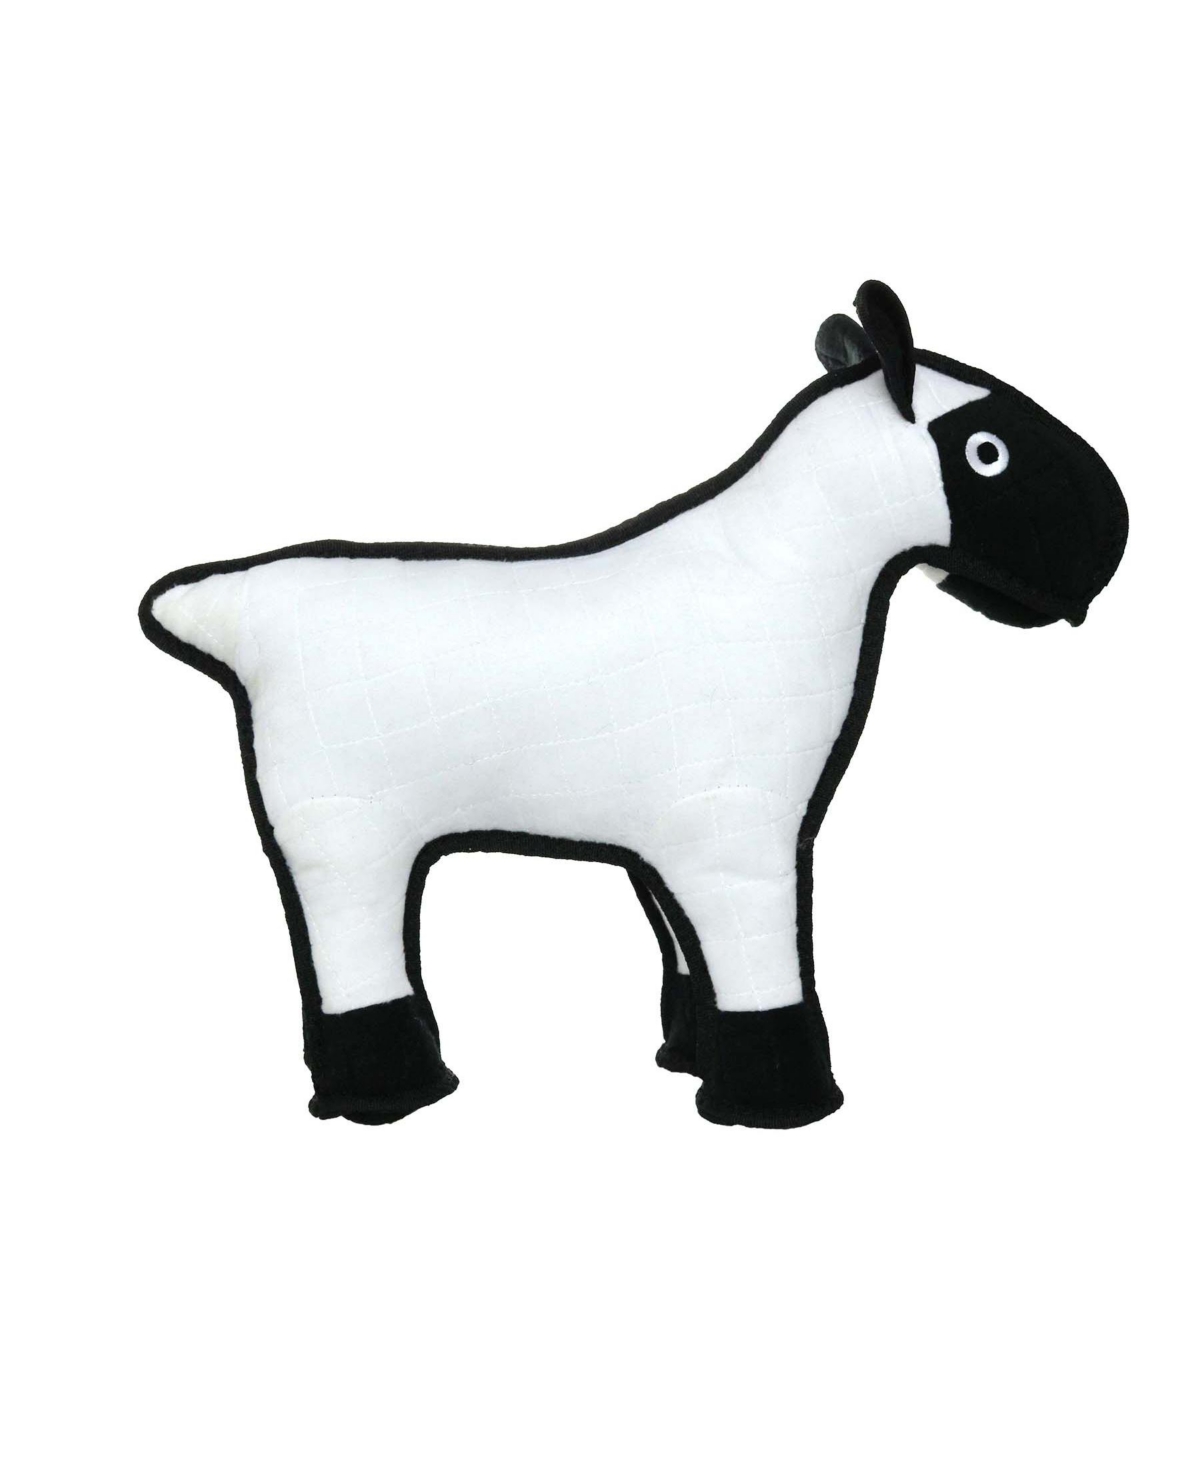 Barnyard Sheep, Dog Toy - White